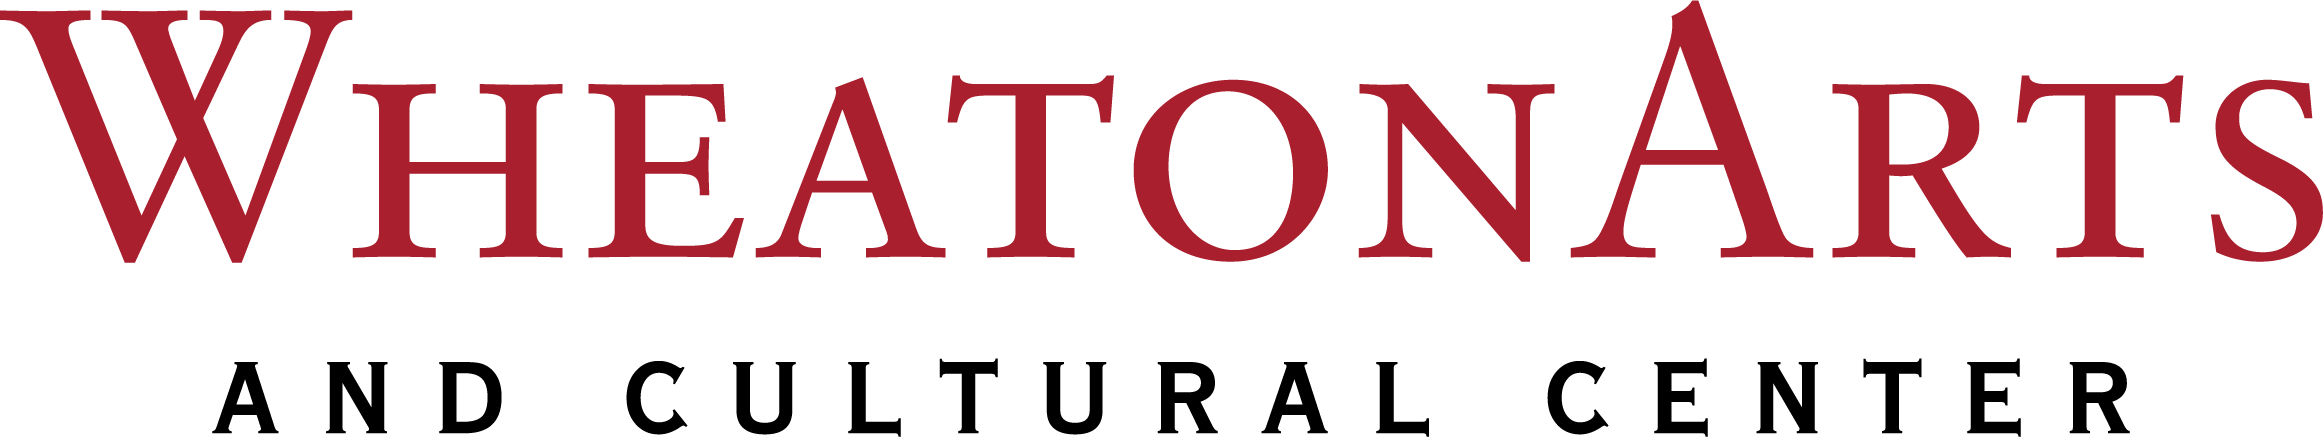 Wheaton Arts Logo